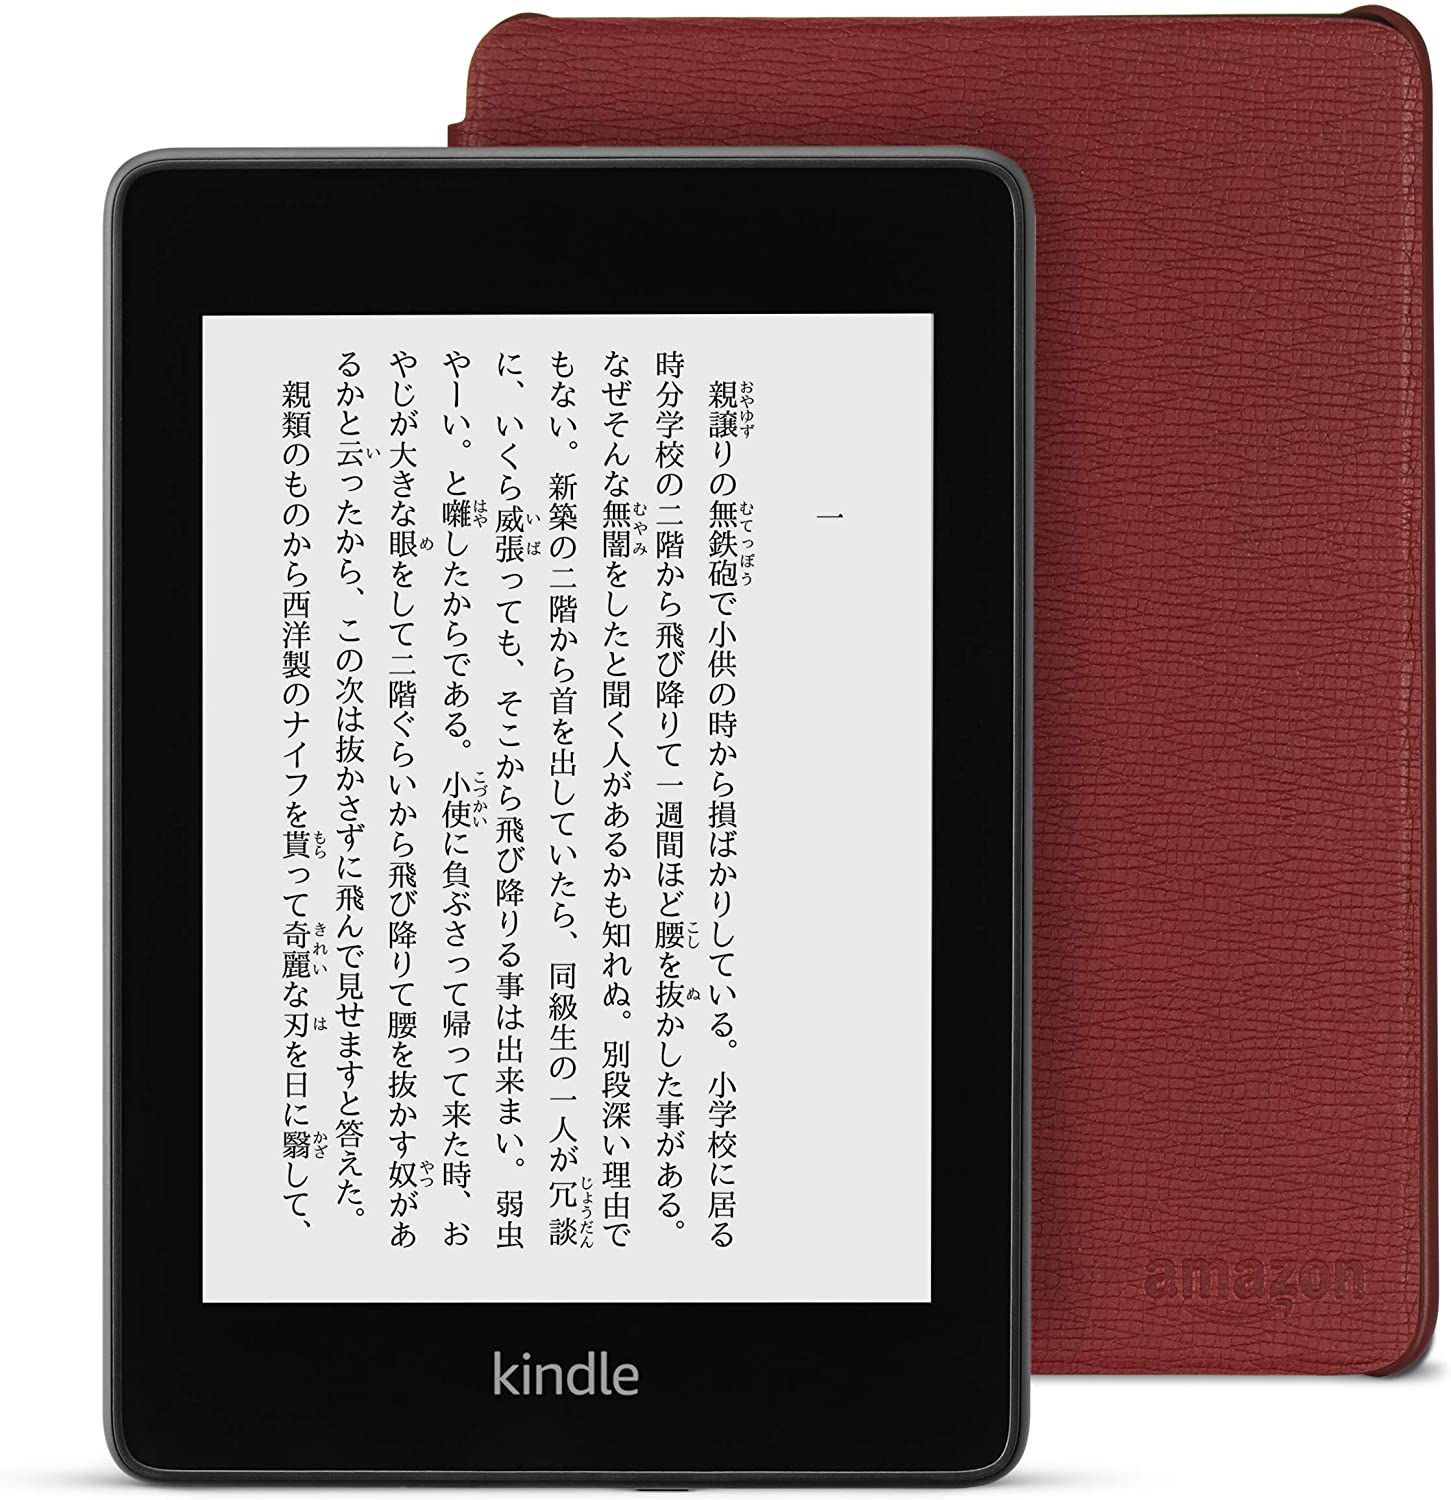 Amazon】Kindle Paperwhite wifi 32GB 電子書籍リーダー (純正カバー